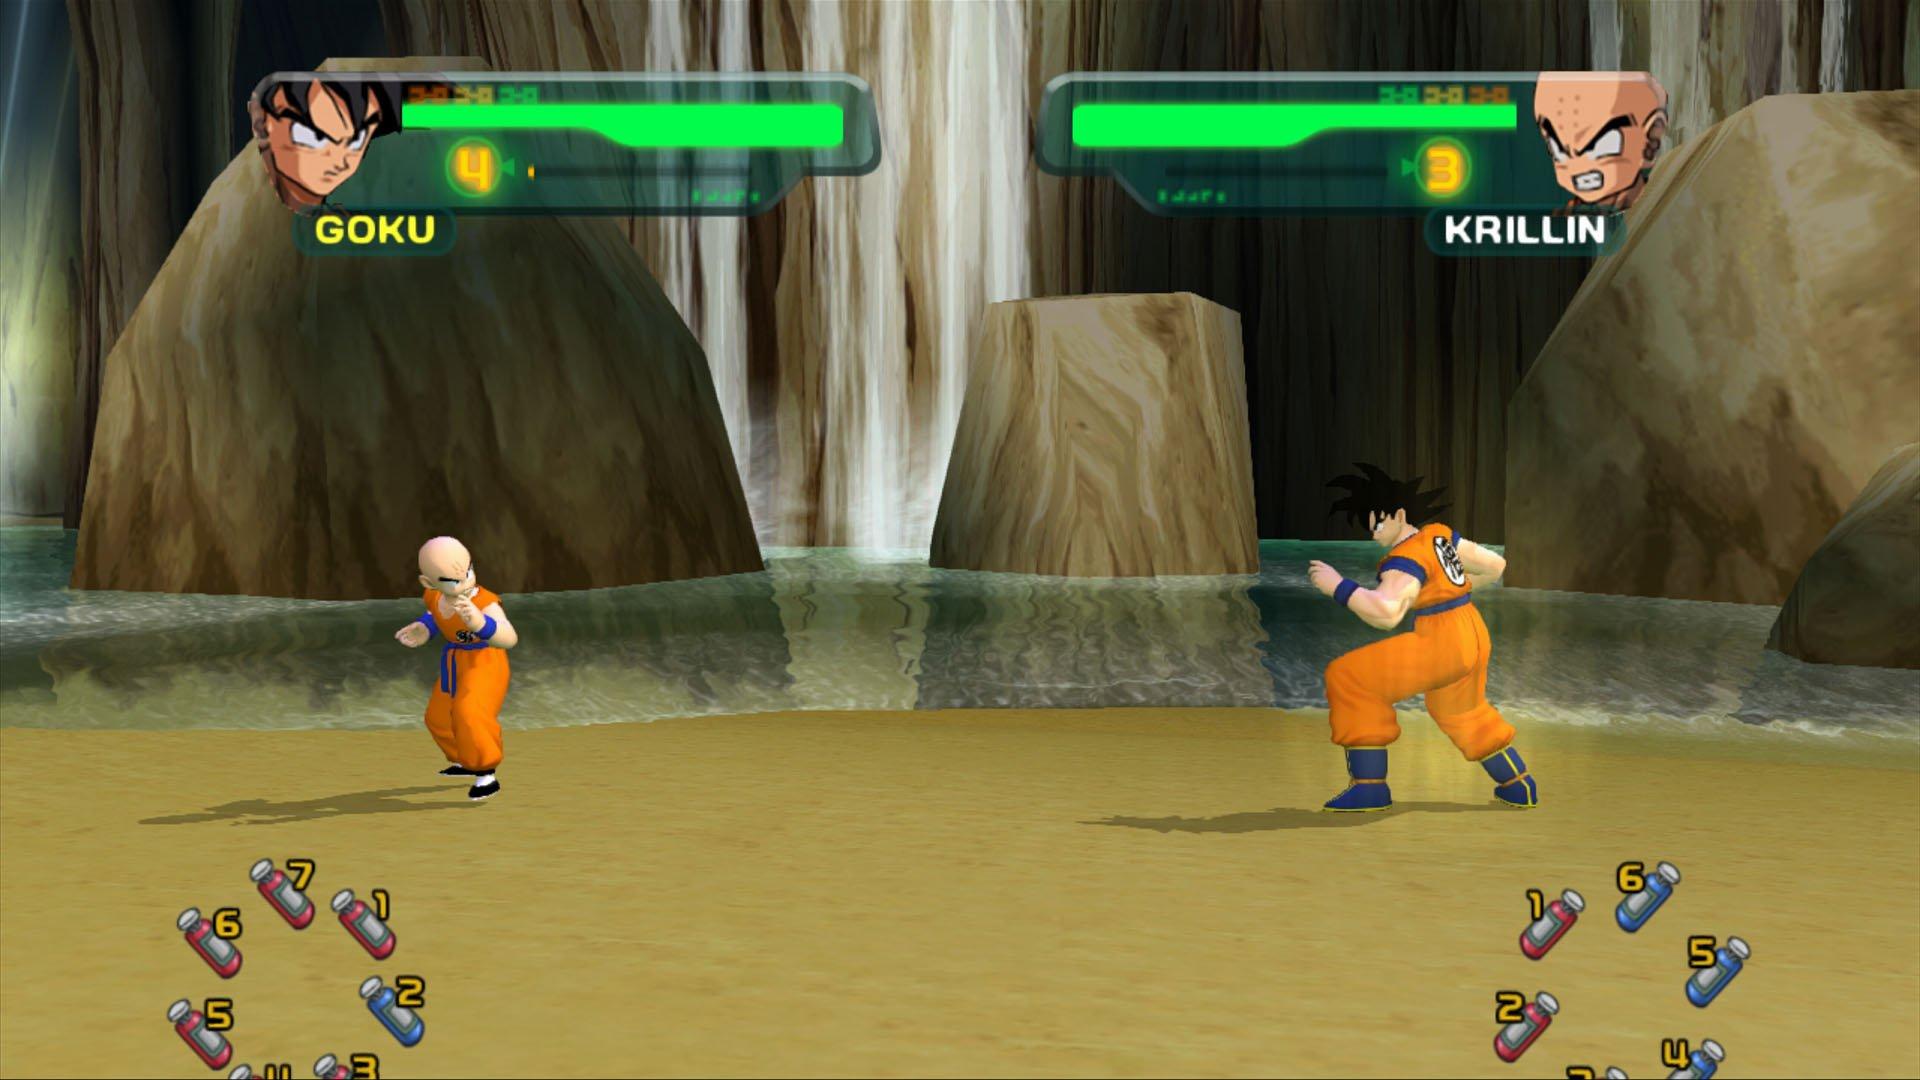 PlayStation 2 - Dragon Ball Z Budokai 3 - Kid Goku - The Models